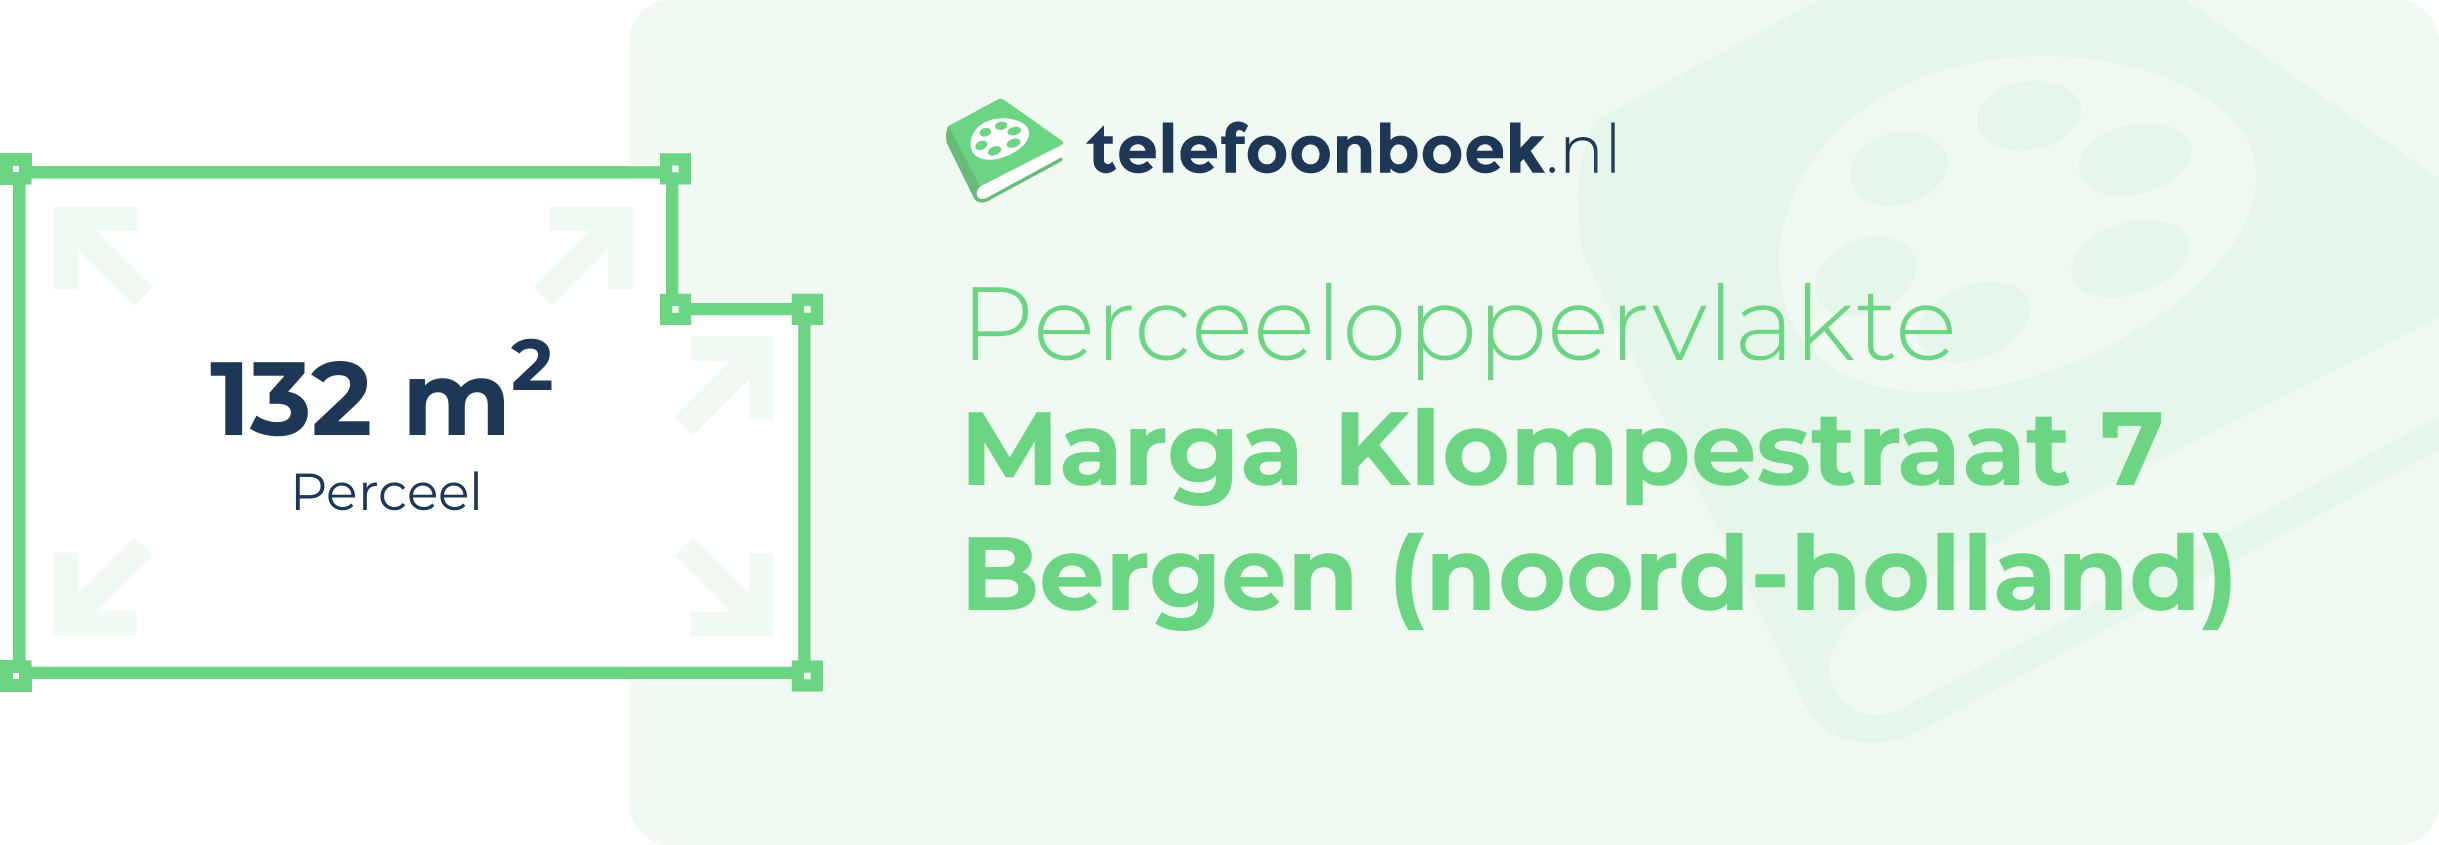 Perceeloppervlakte Marga Klompestraat 7 Bergen (Noord-Holland)